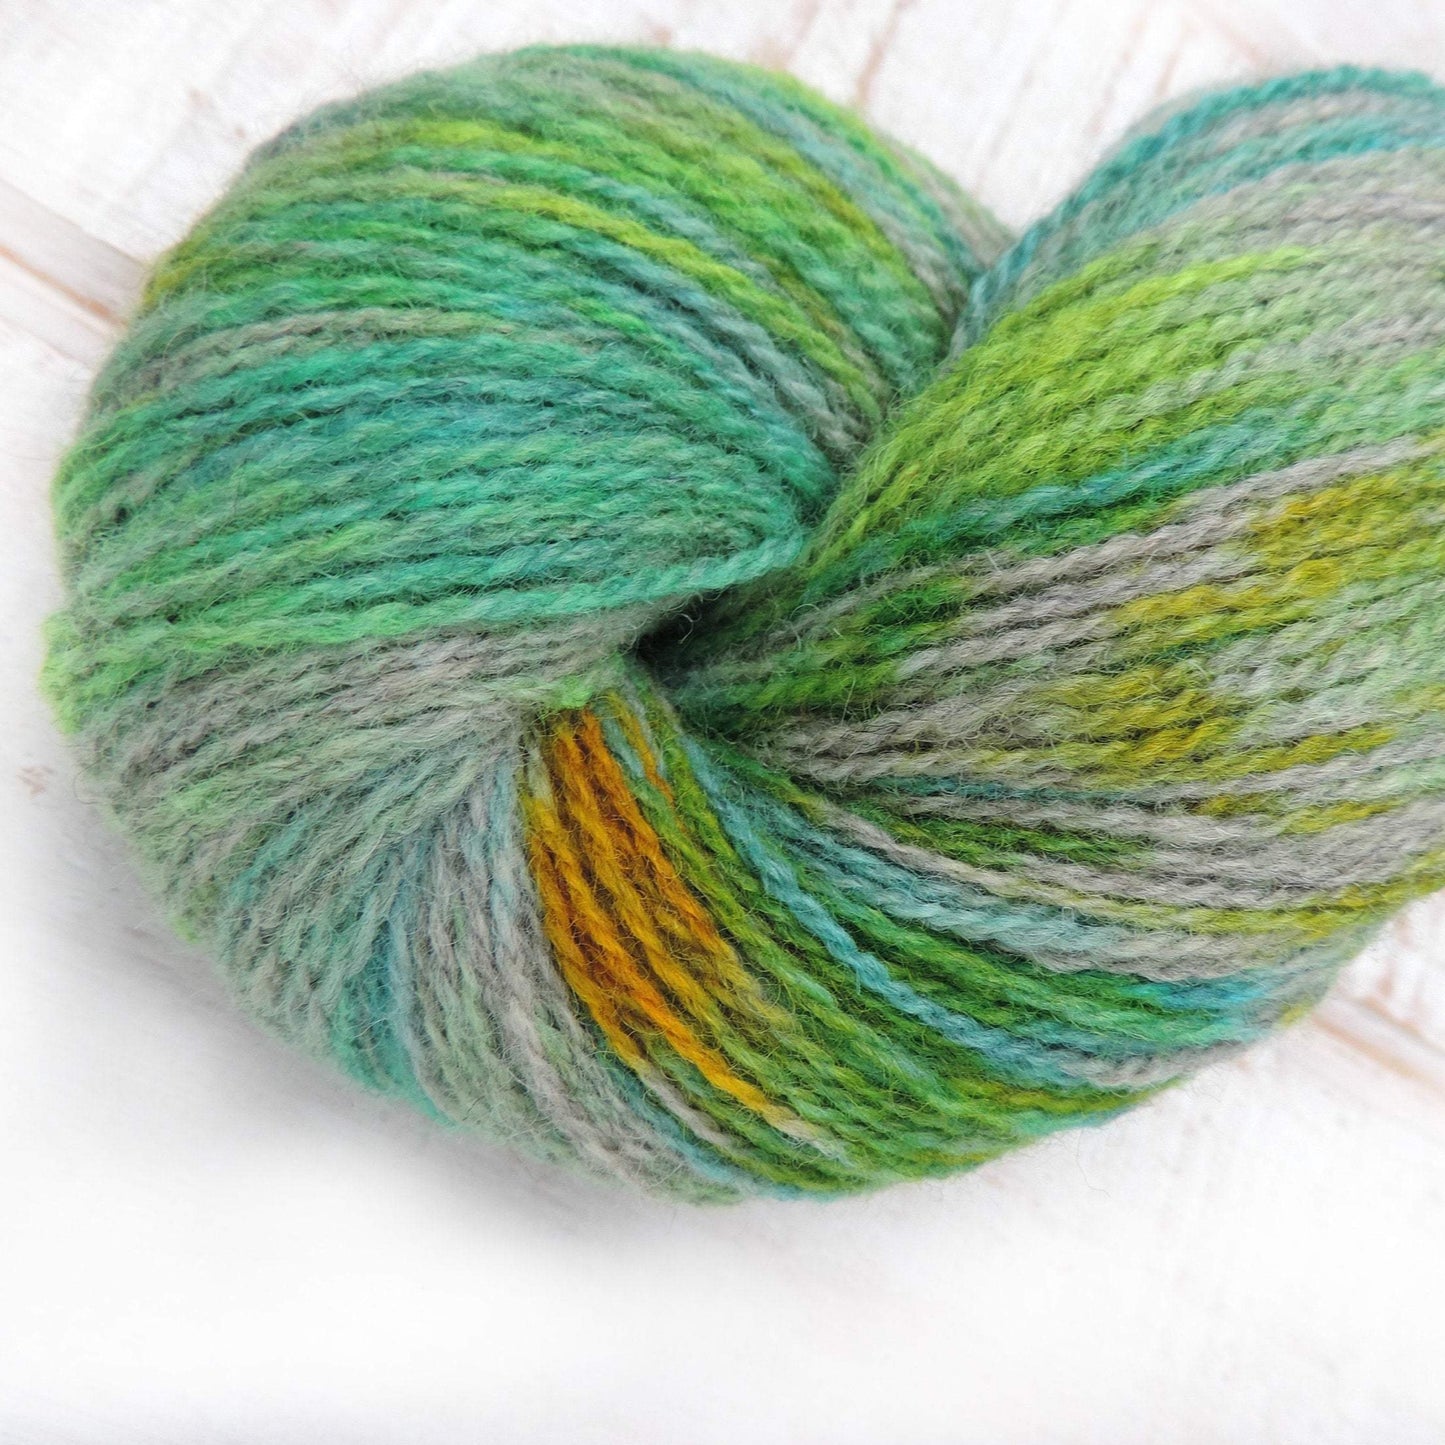 Woodlands in Spring - Trollfjord sock - Hand Dyed Yarn - Variegated Yarn